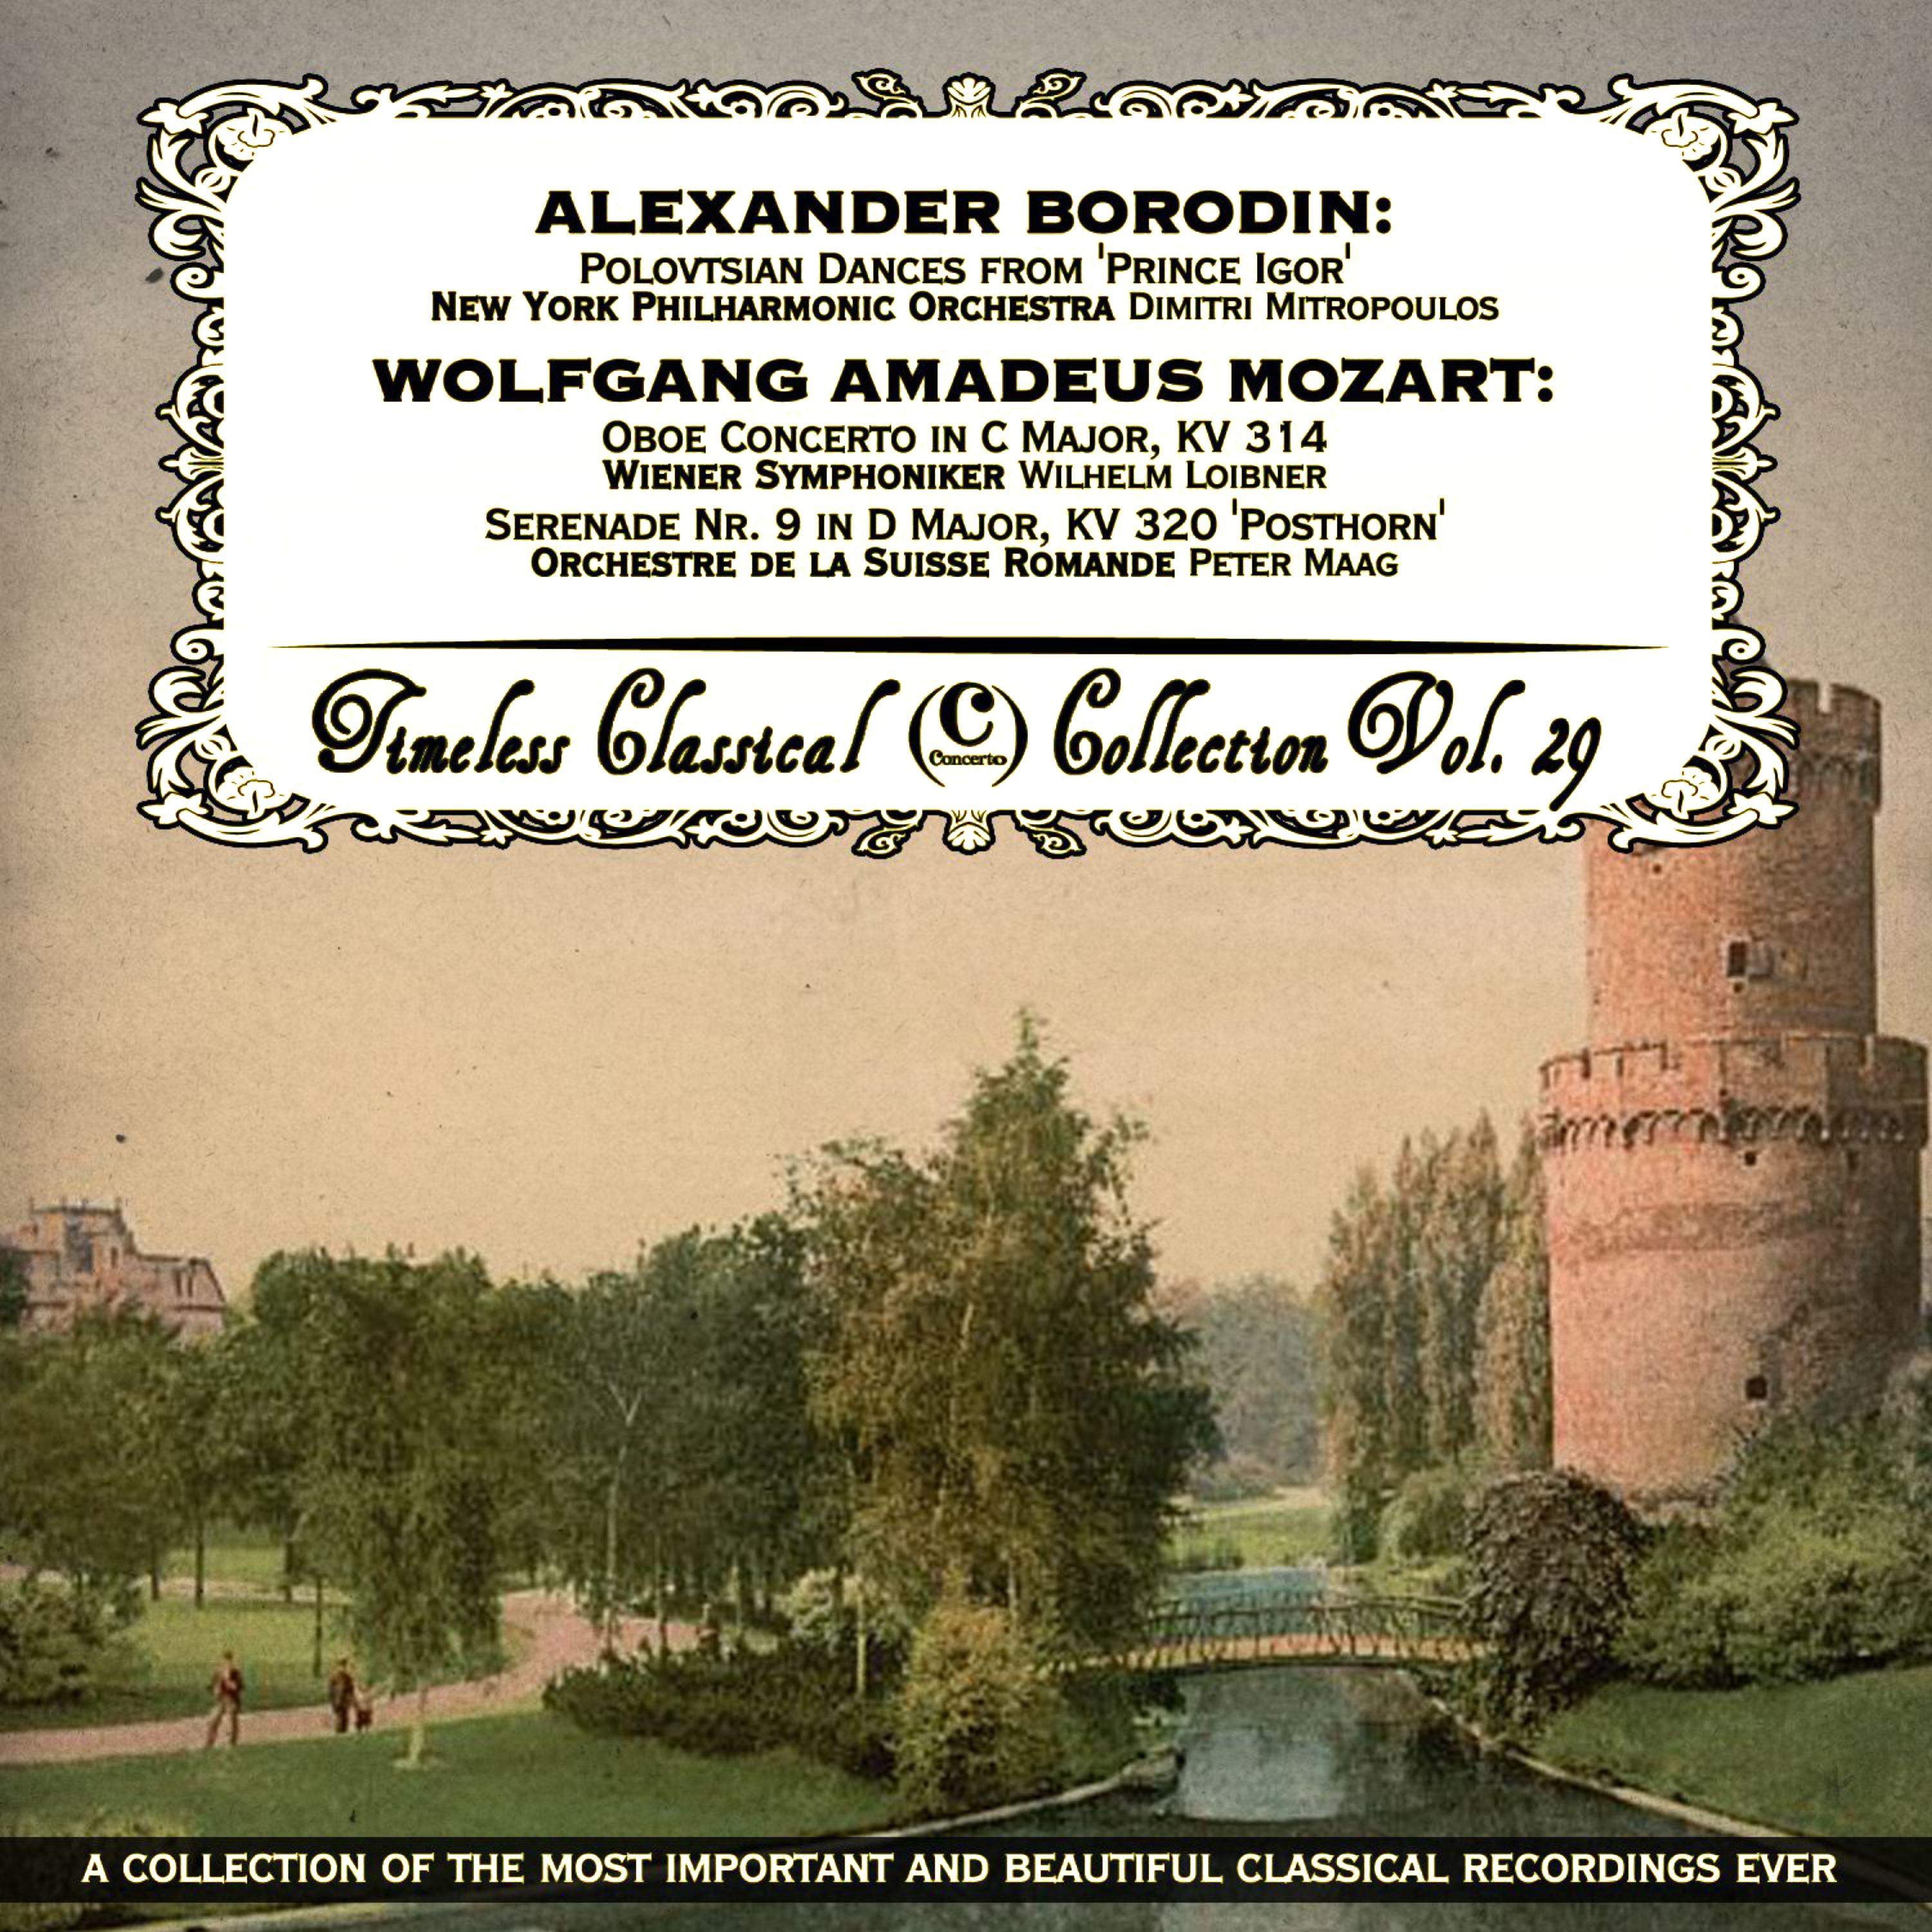 Posthorn, Serenade No. 9 in D Major, KV 320: I. Adagio maestoso - Allegro con spirito